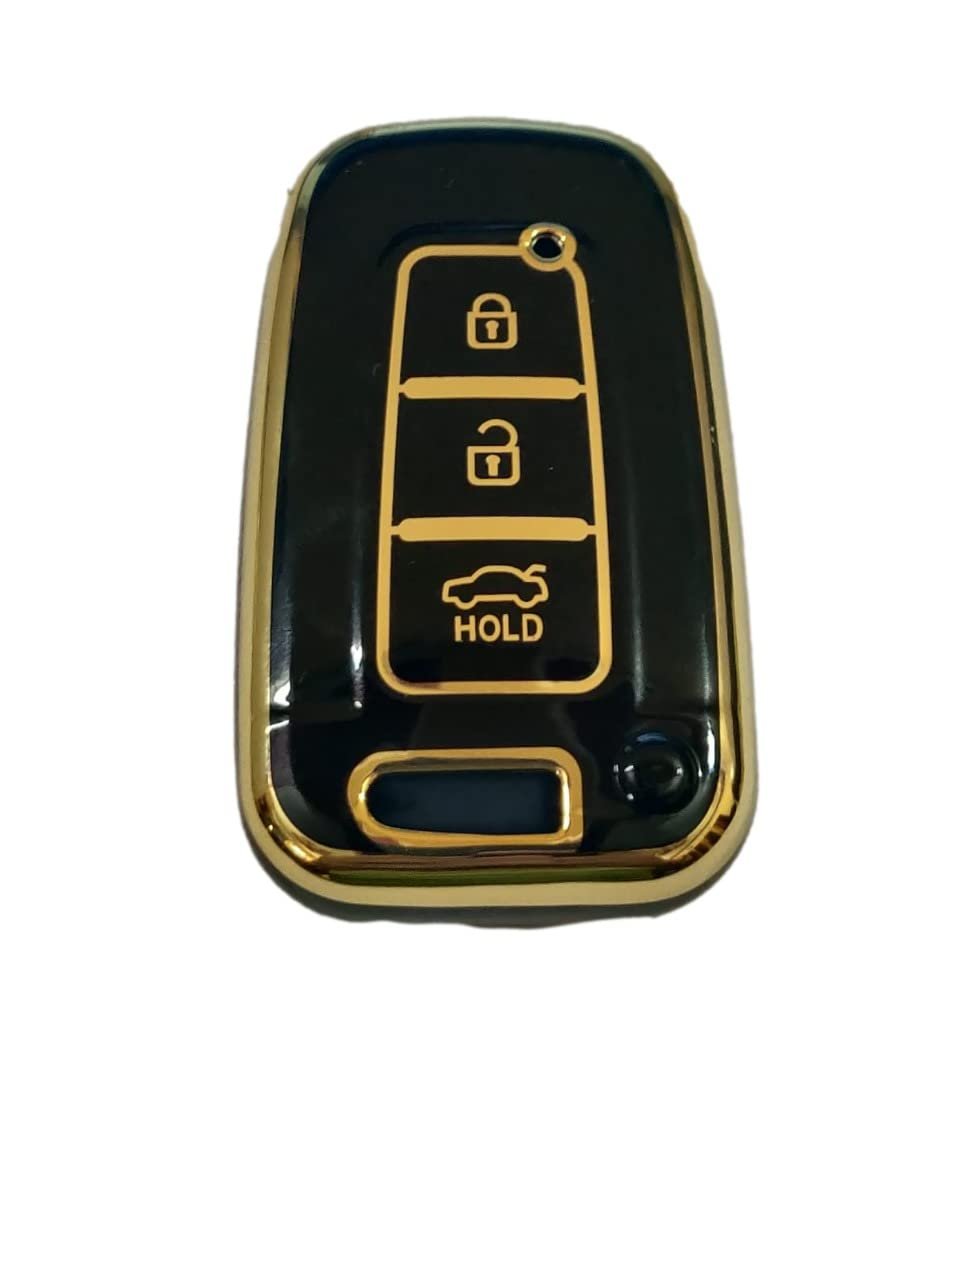 TPU Key Cover Compatible for Hyundai Verna Fluidic Old i20 Santafe Push Button Smart Key (Black) Image 